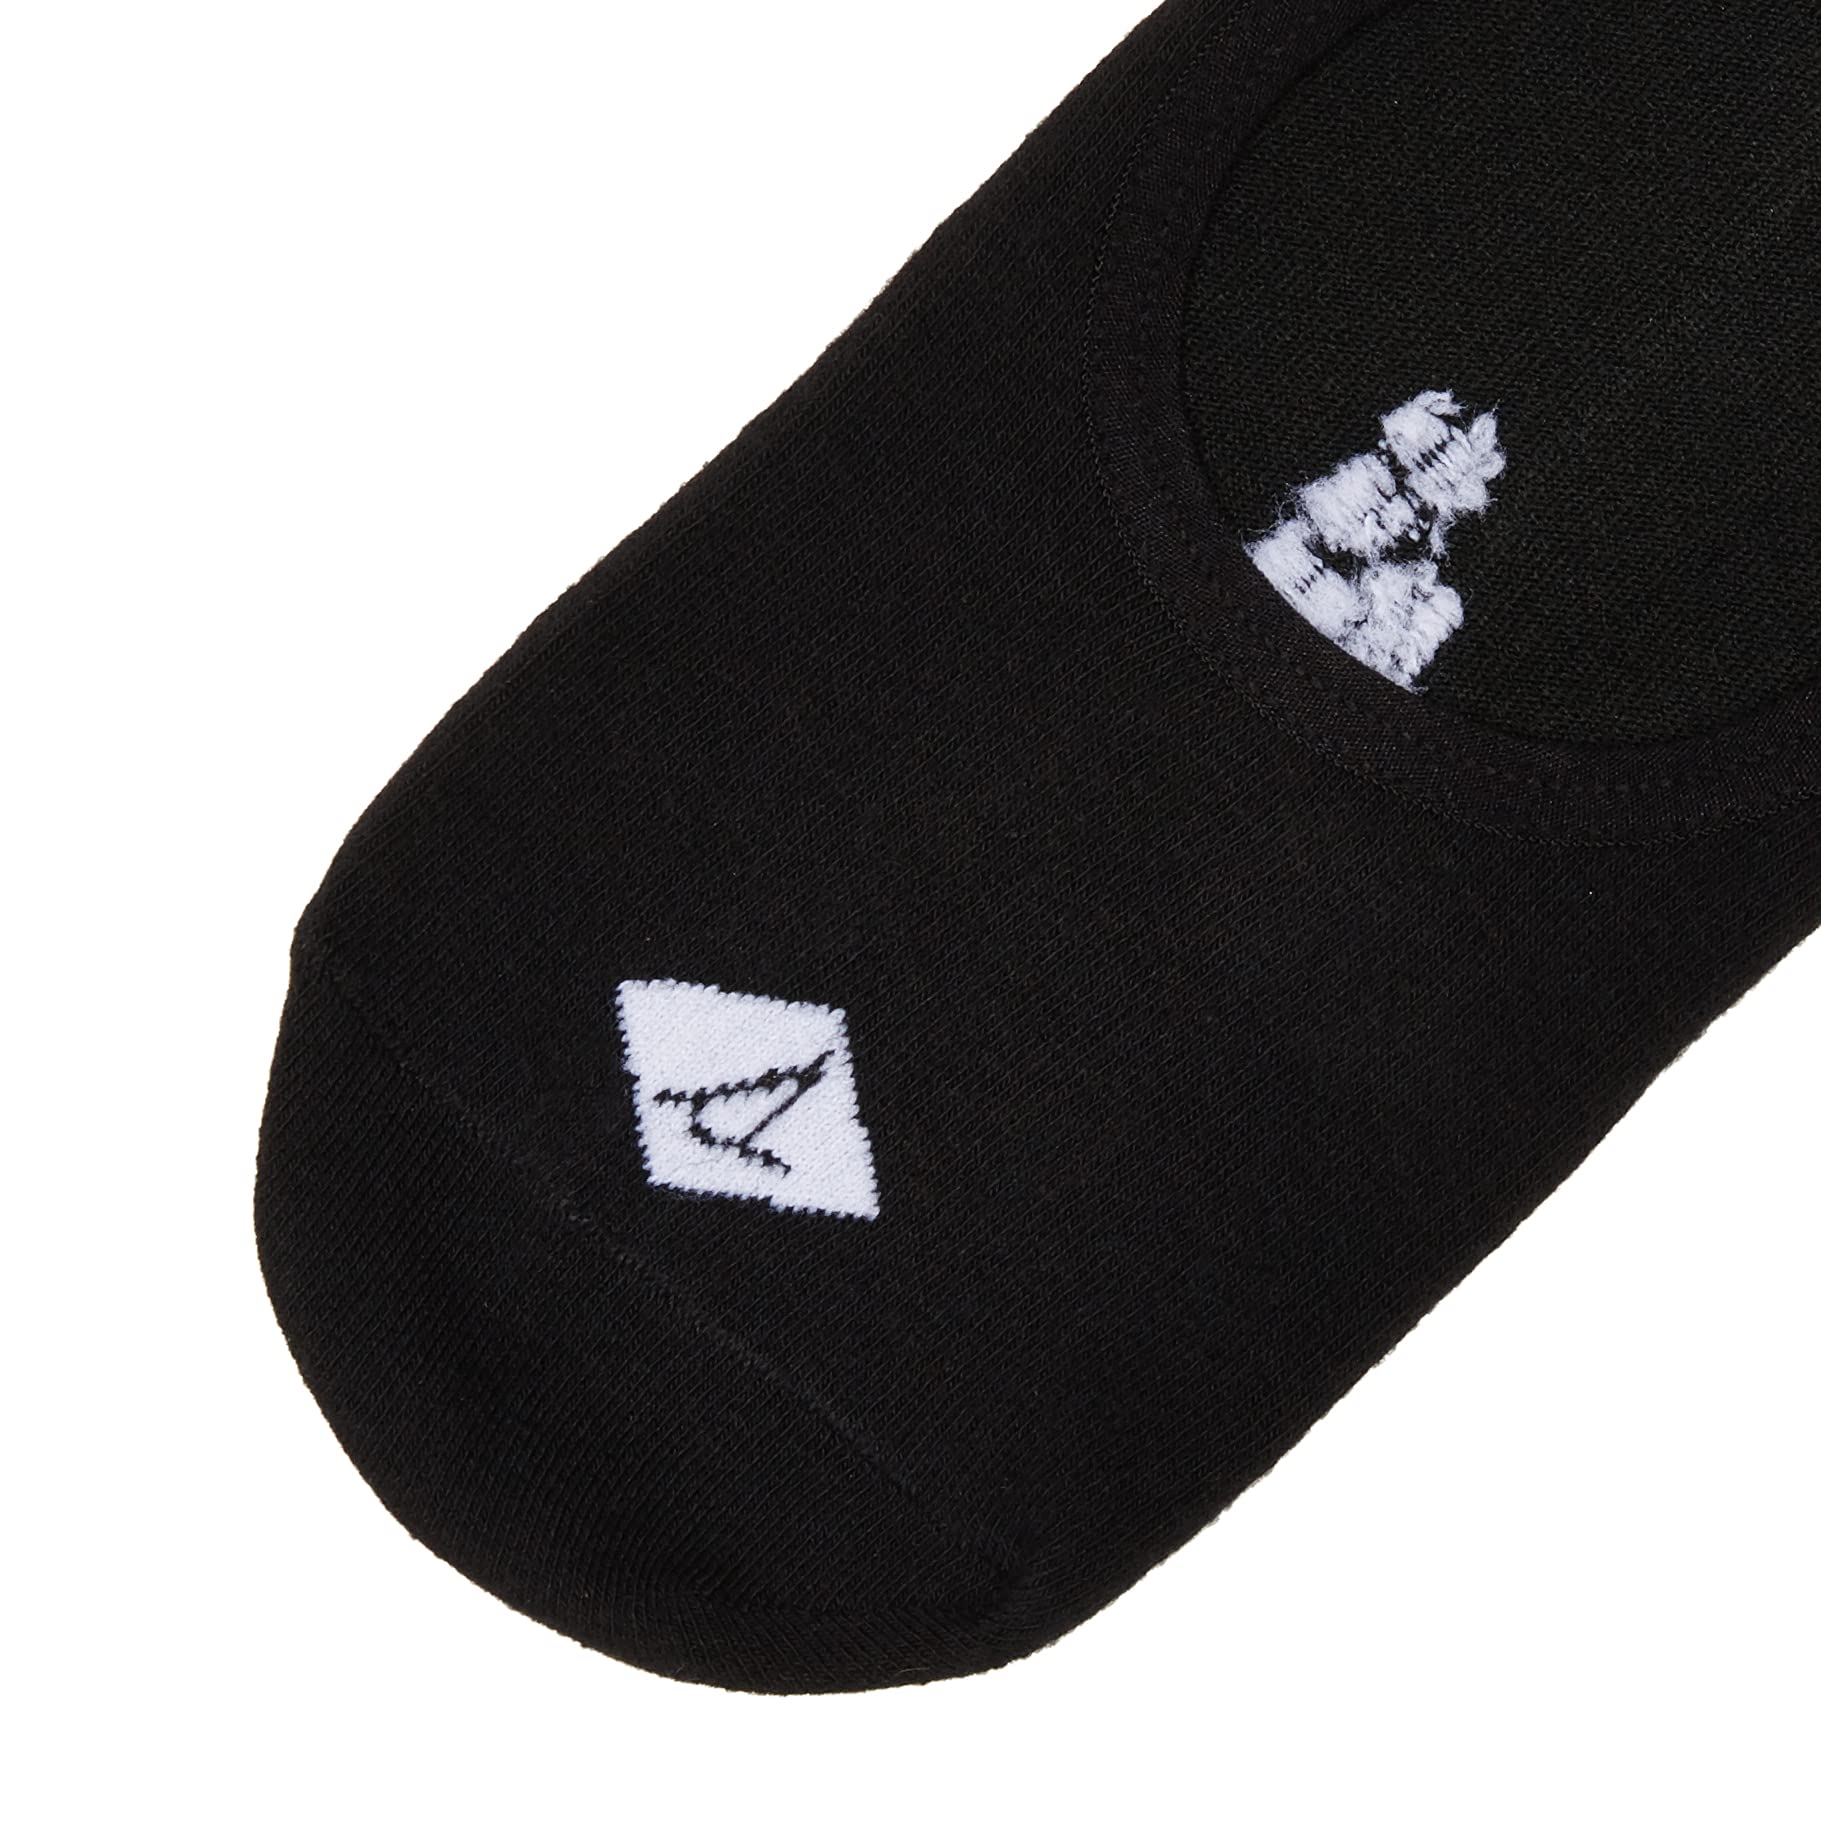 Sperry Top-Sider Men's Solid Canoe 3 Pair Pack Liner Socks, Black, 10-13 (Shoe Size 6-12)